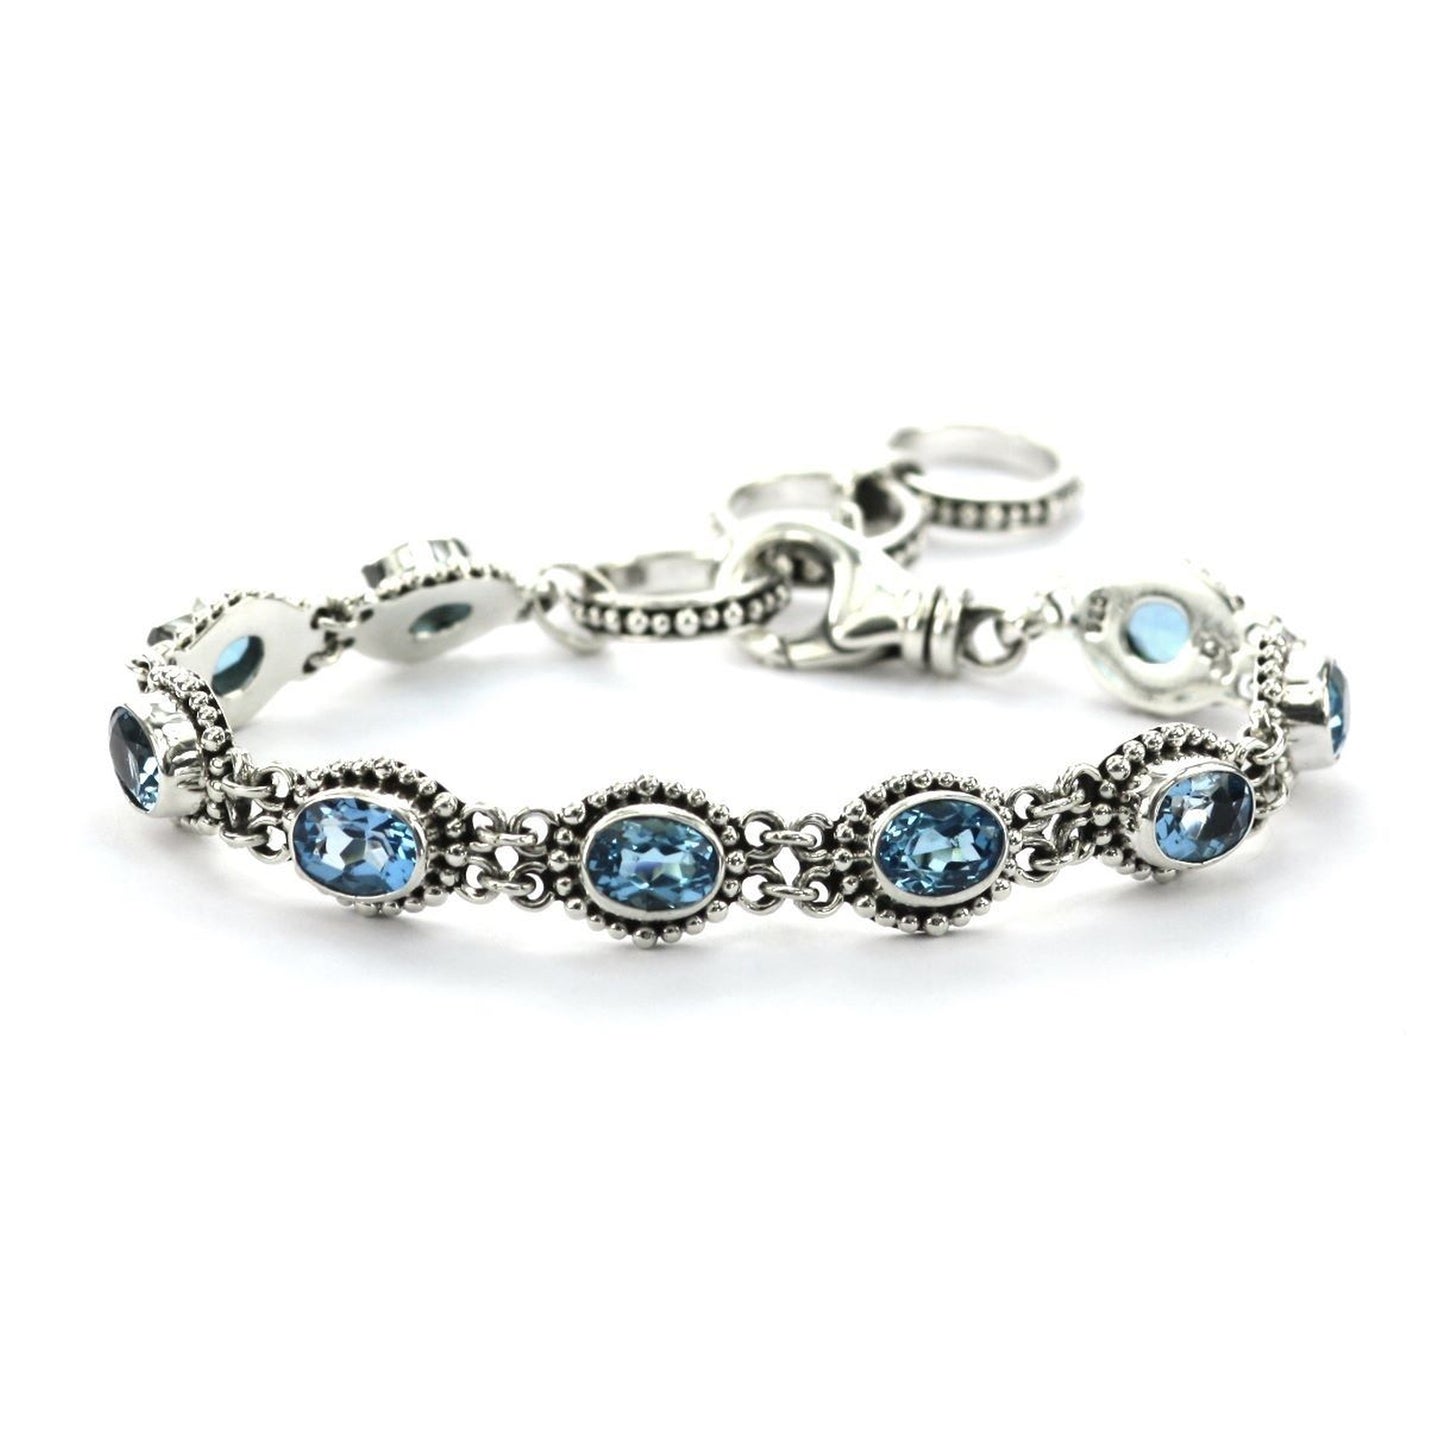 Silver bracelet with nine blue topaz gemstones set in beaded links.